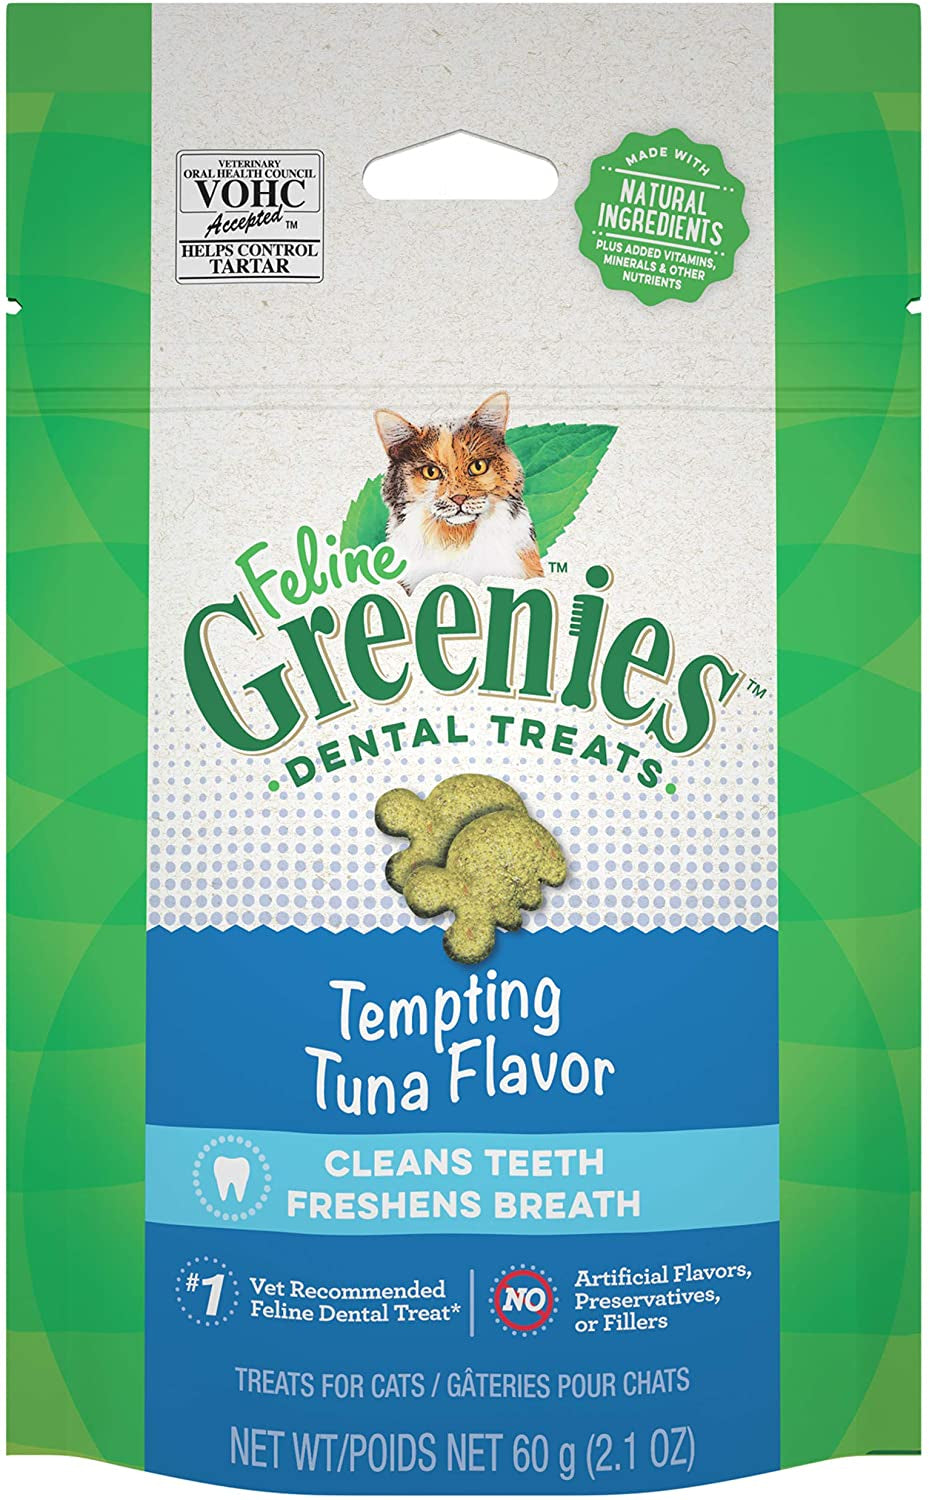 8.4 oz (4 x 2.1 oz) Greenies Feline Dental Treats Tempting Tuna Flavor